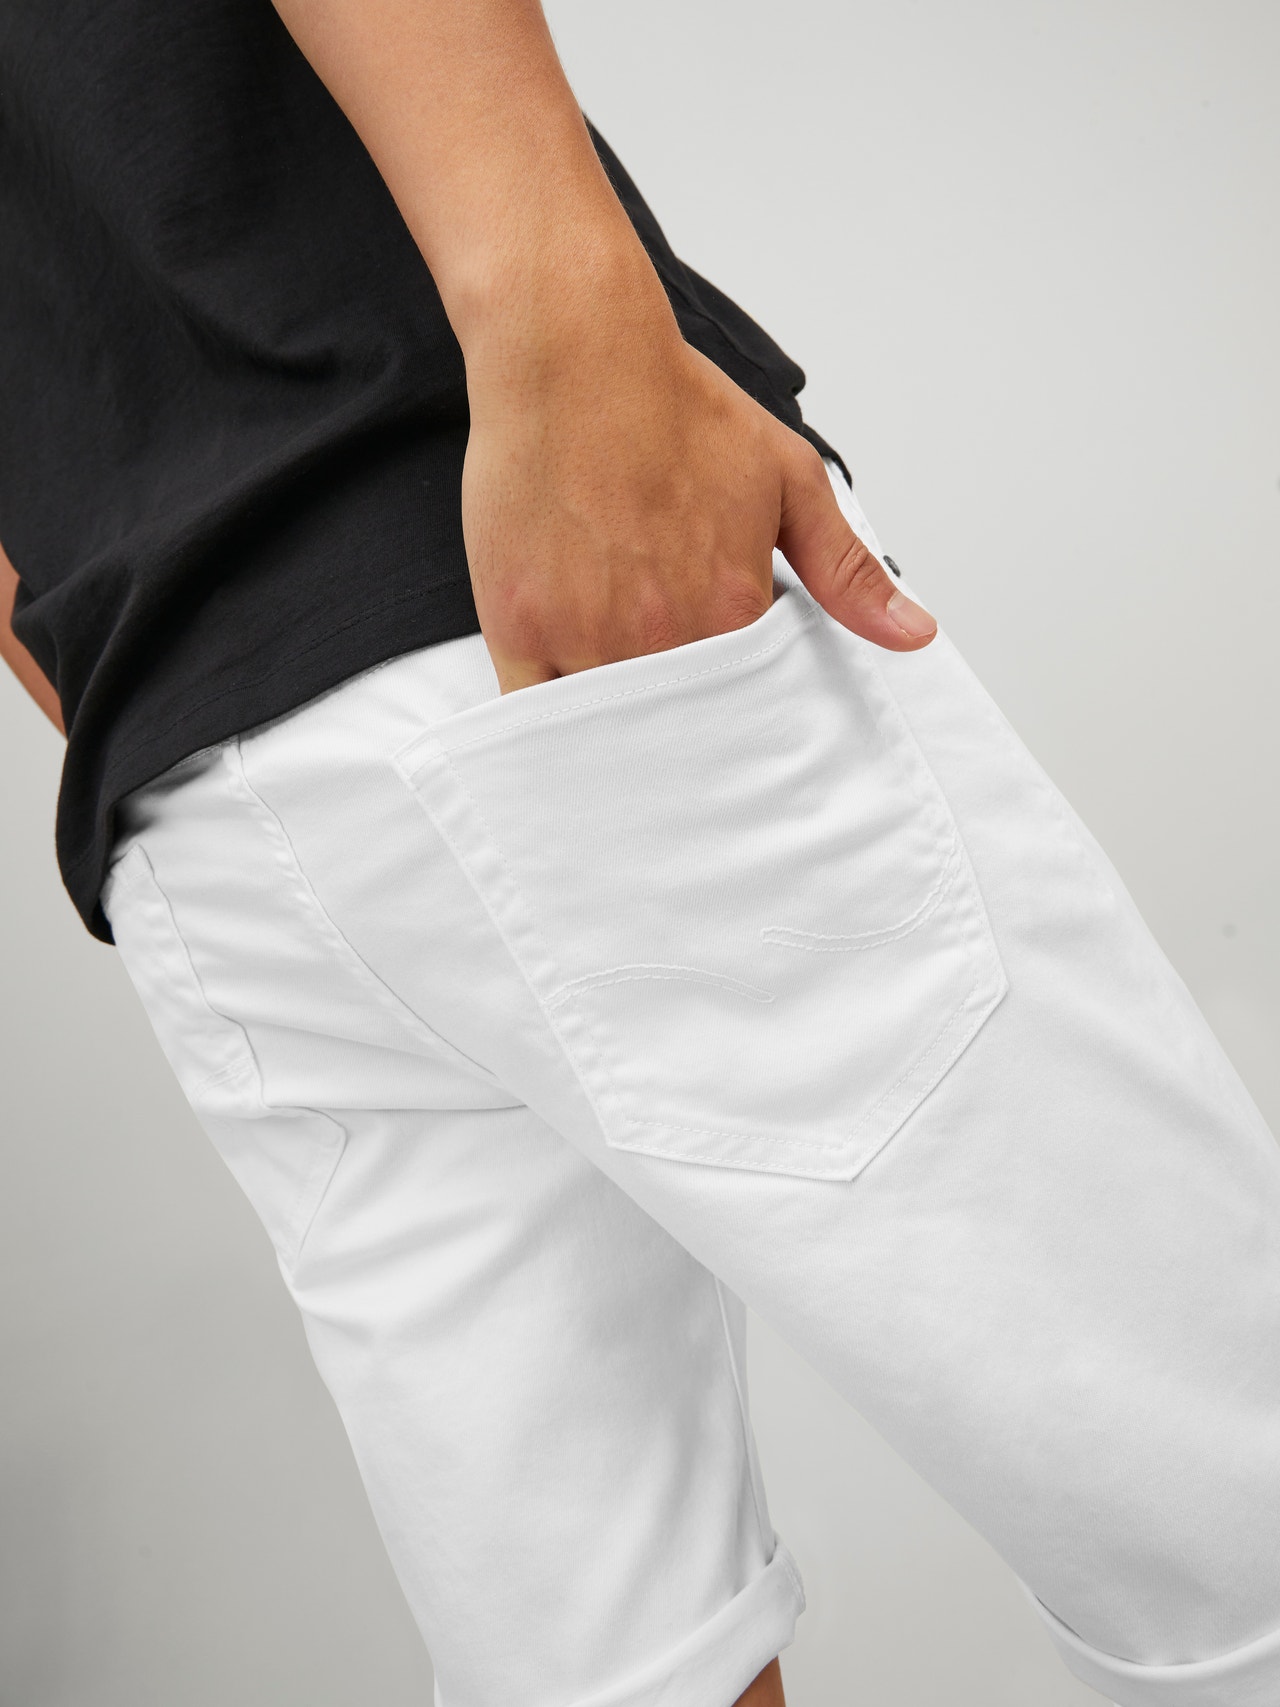 Jack & Jones Regular Fit Shorts -Bright White - 12232400